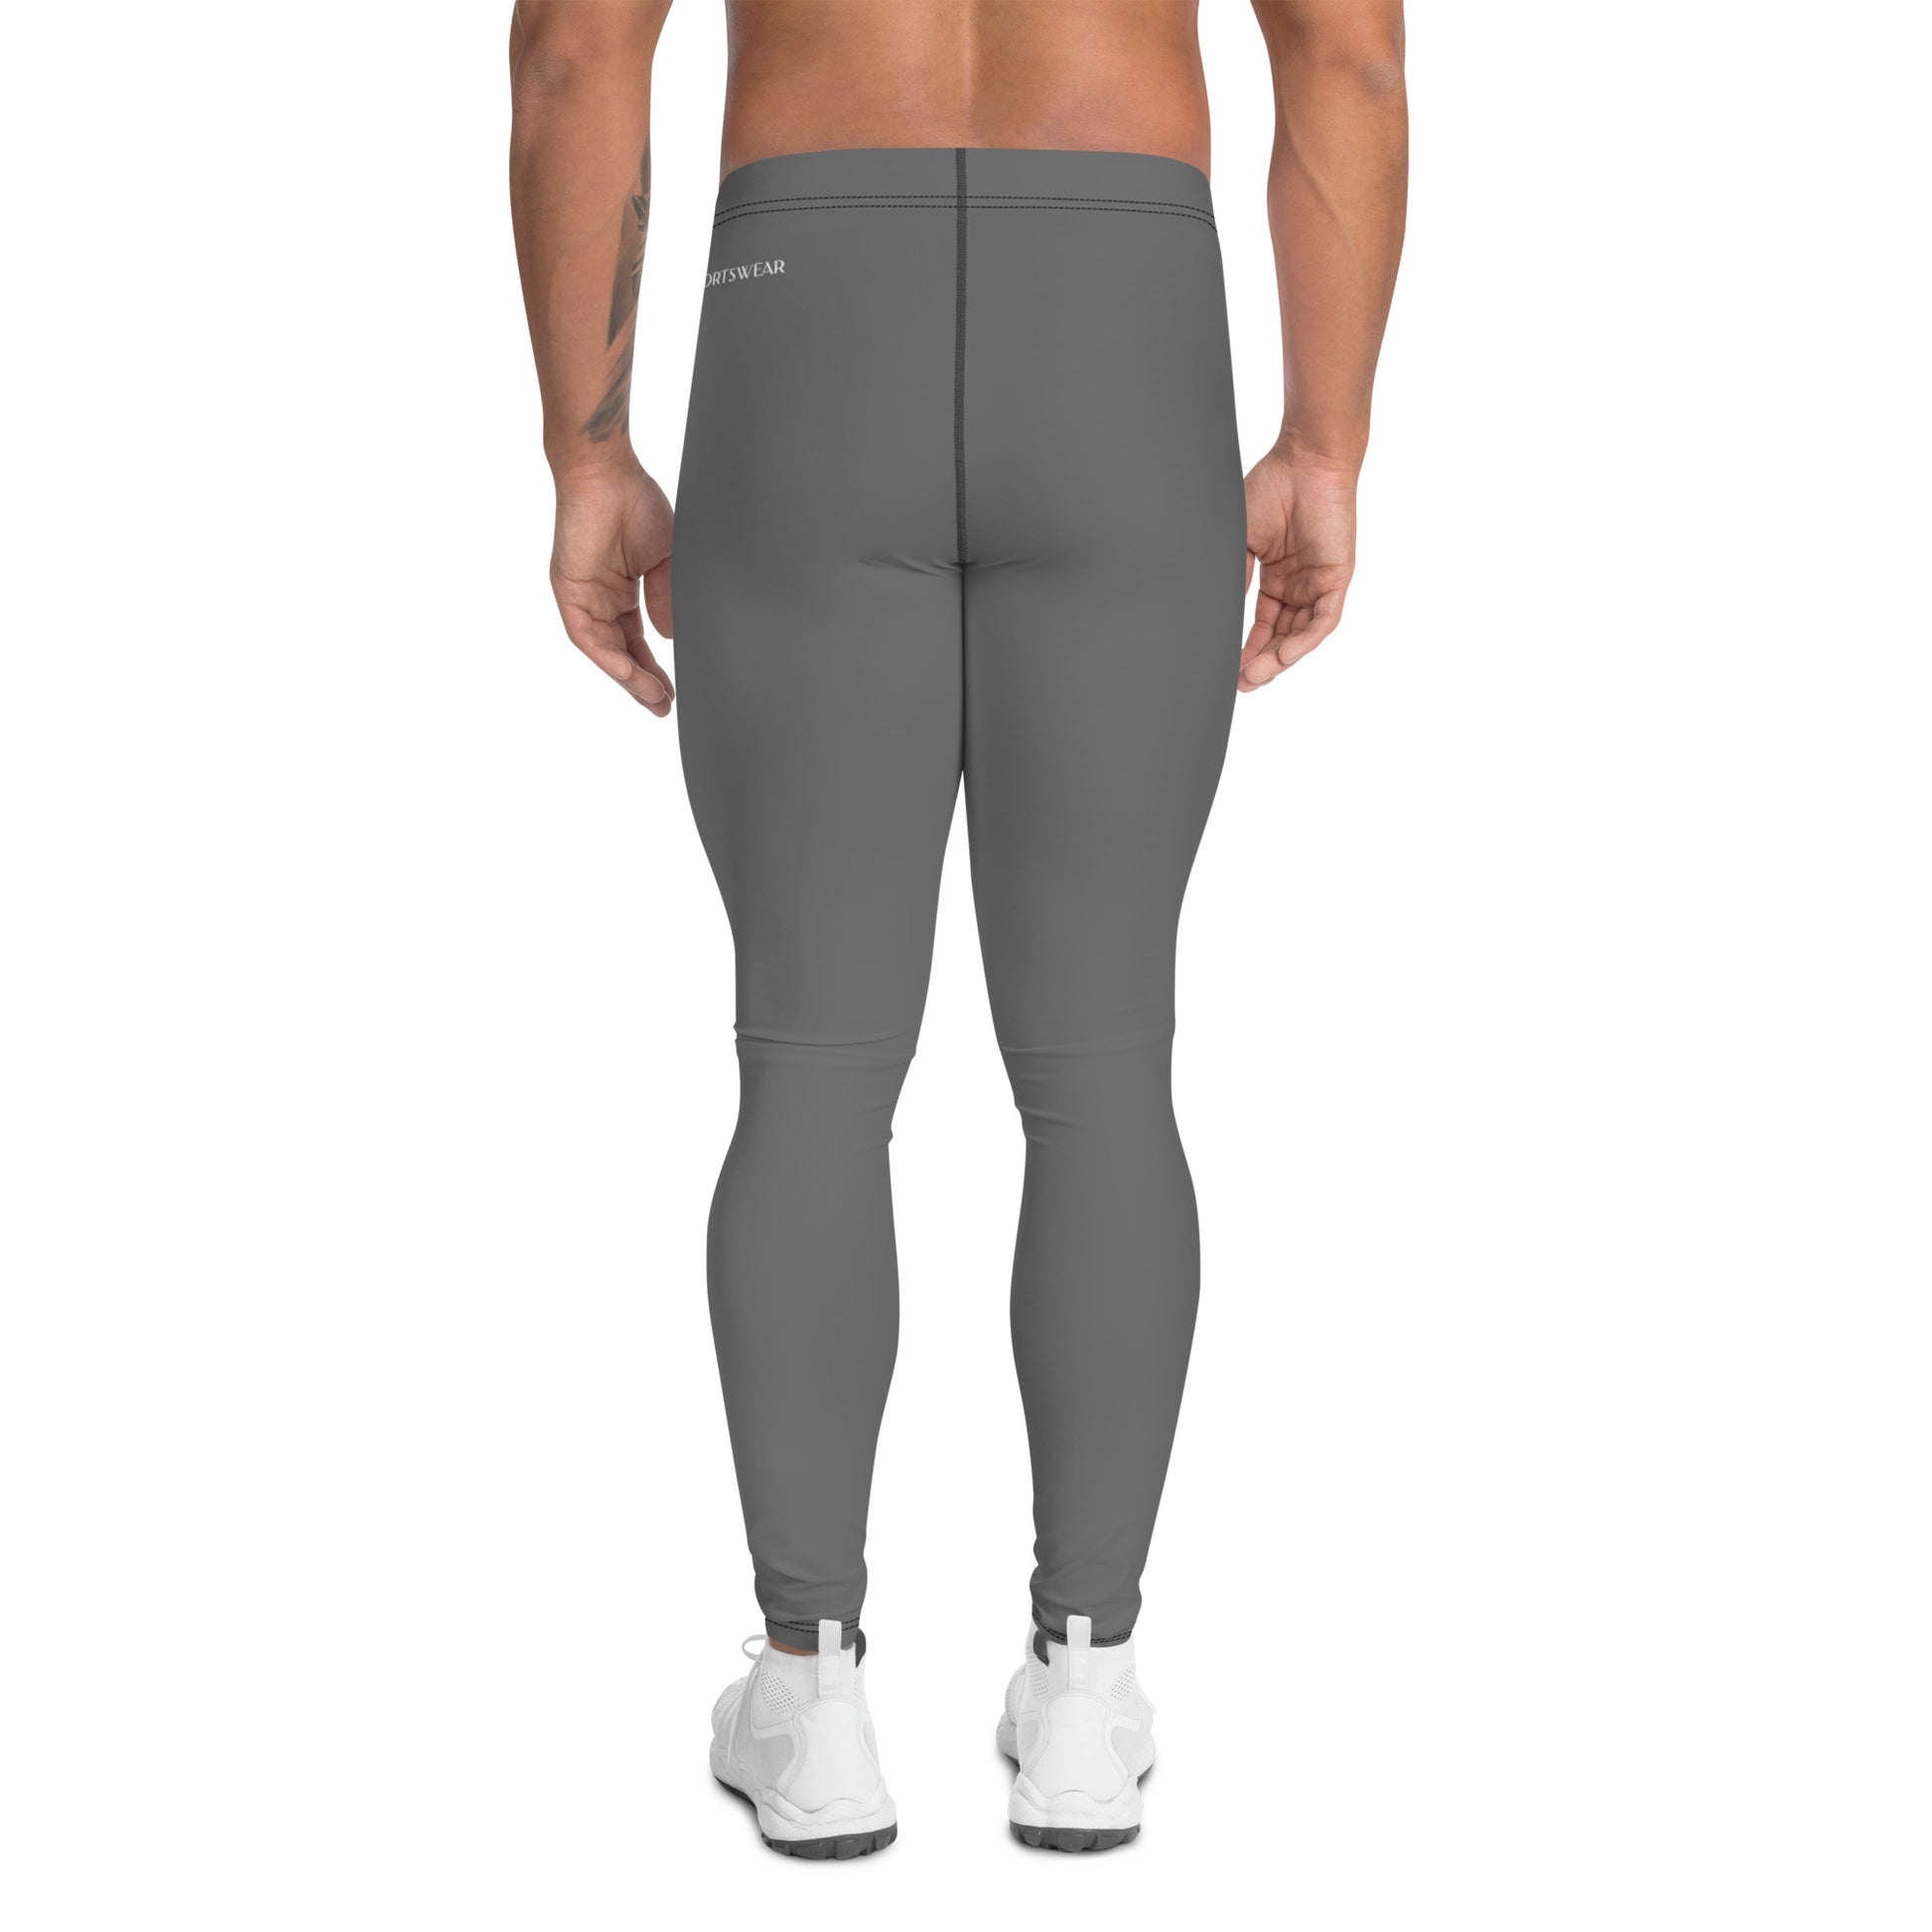 Humble Sportswear, men's long color match grey compression sports leggings 